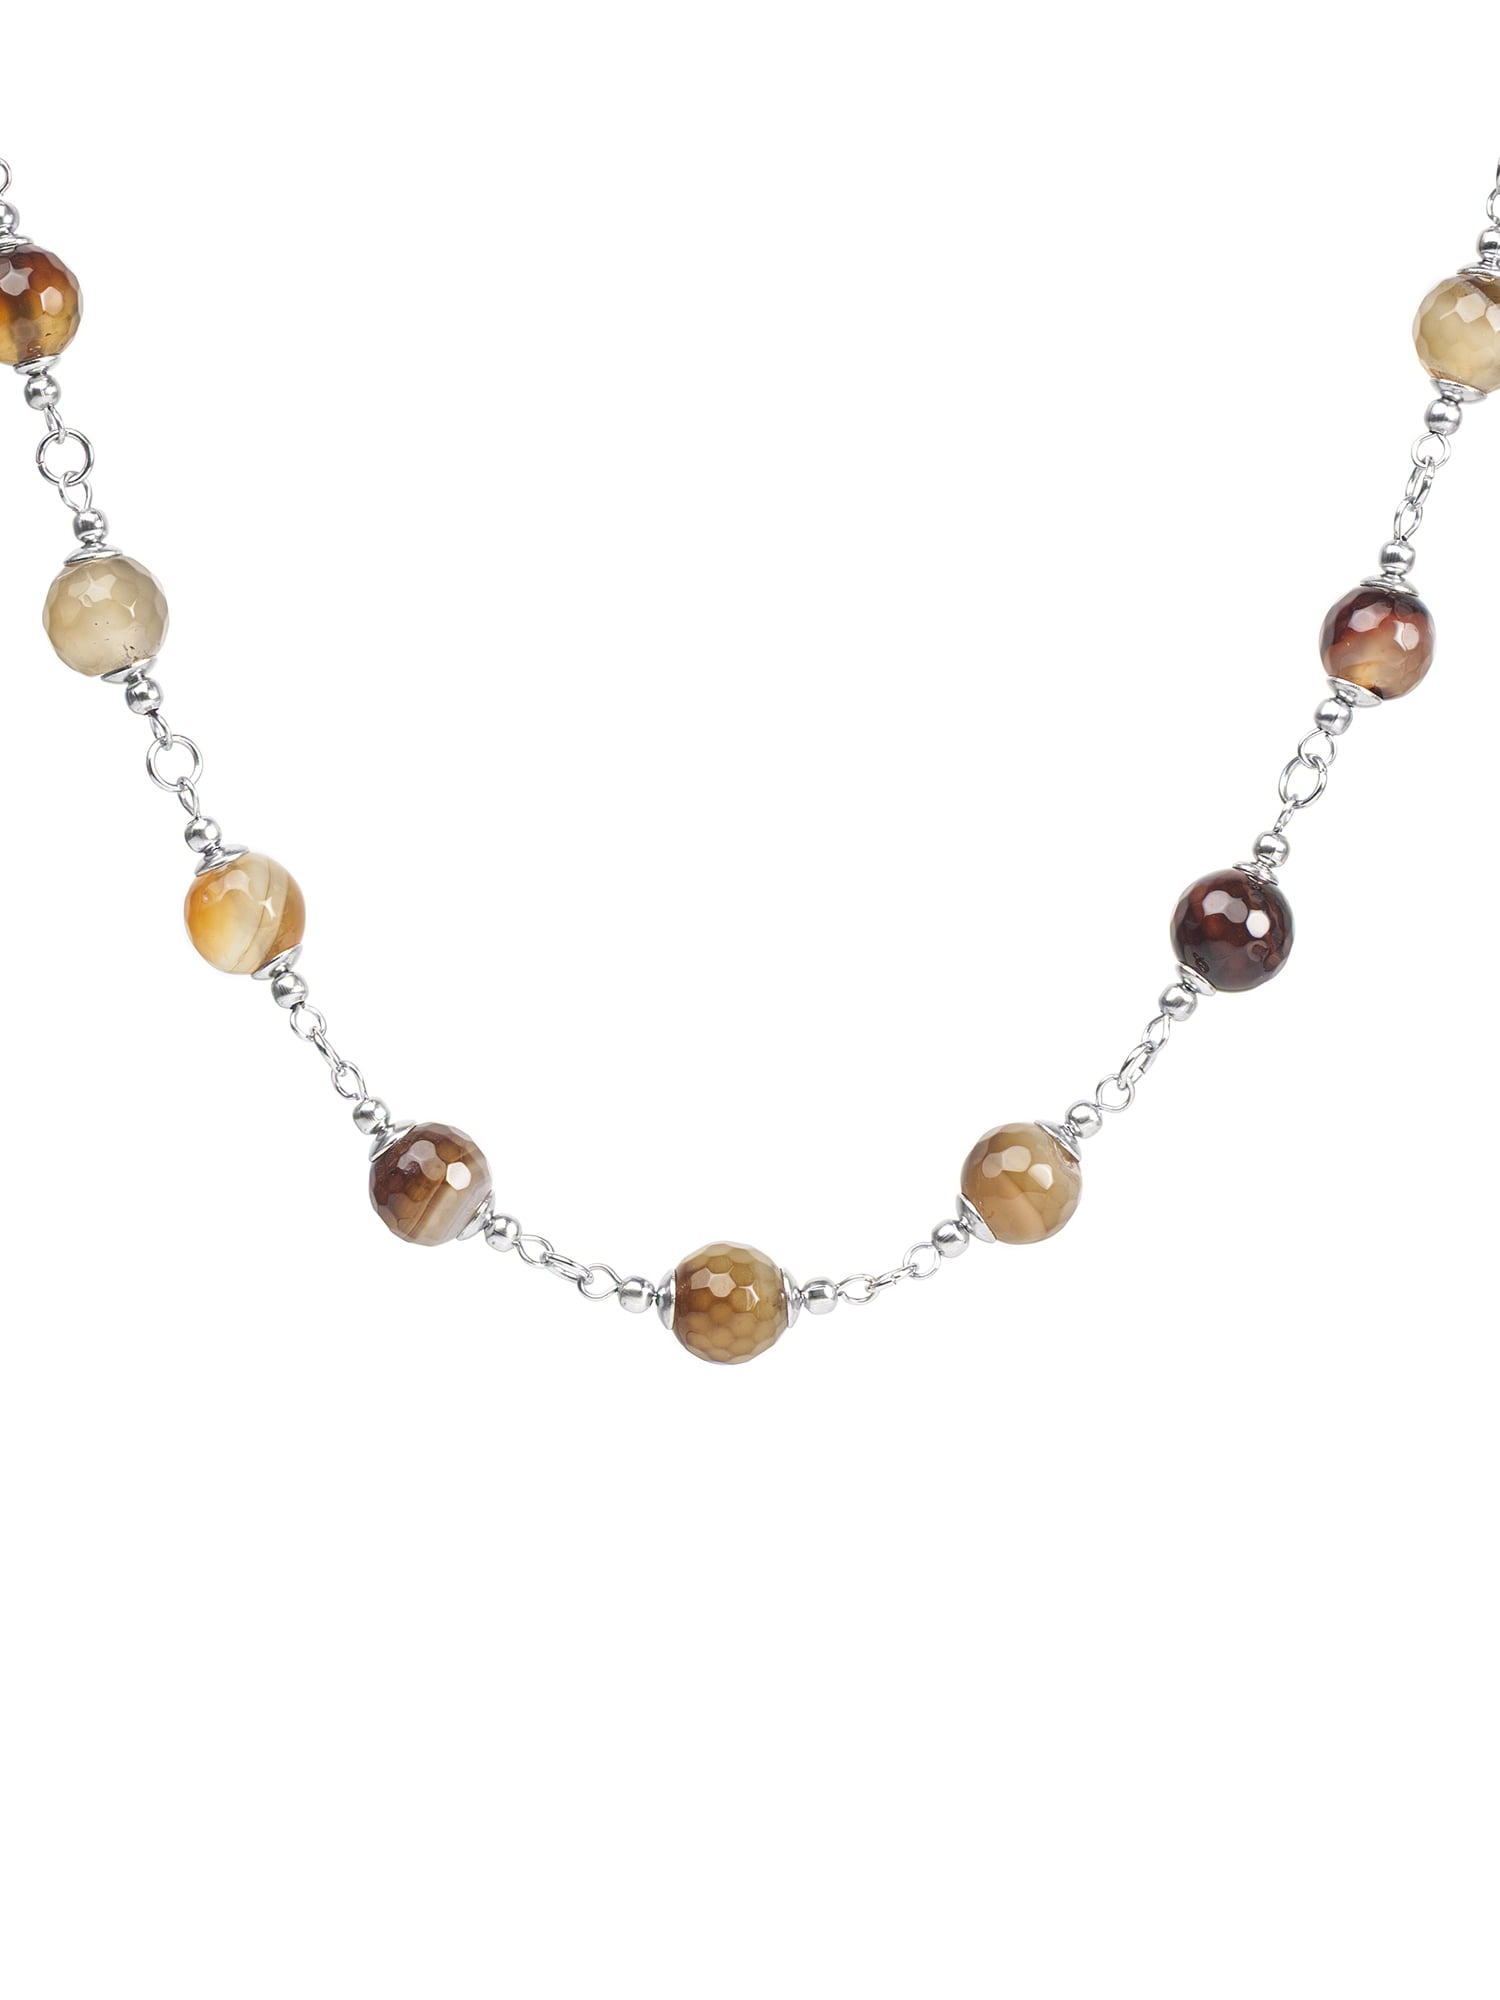 Details about   Genuine Agate Pendant Necklace 